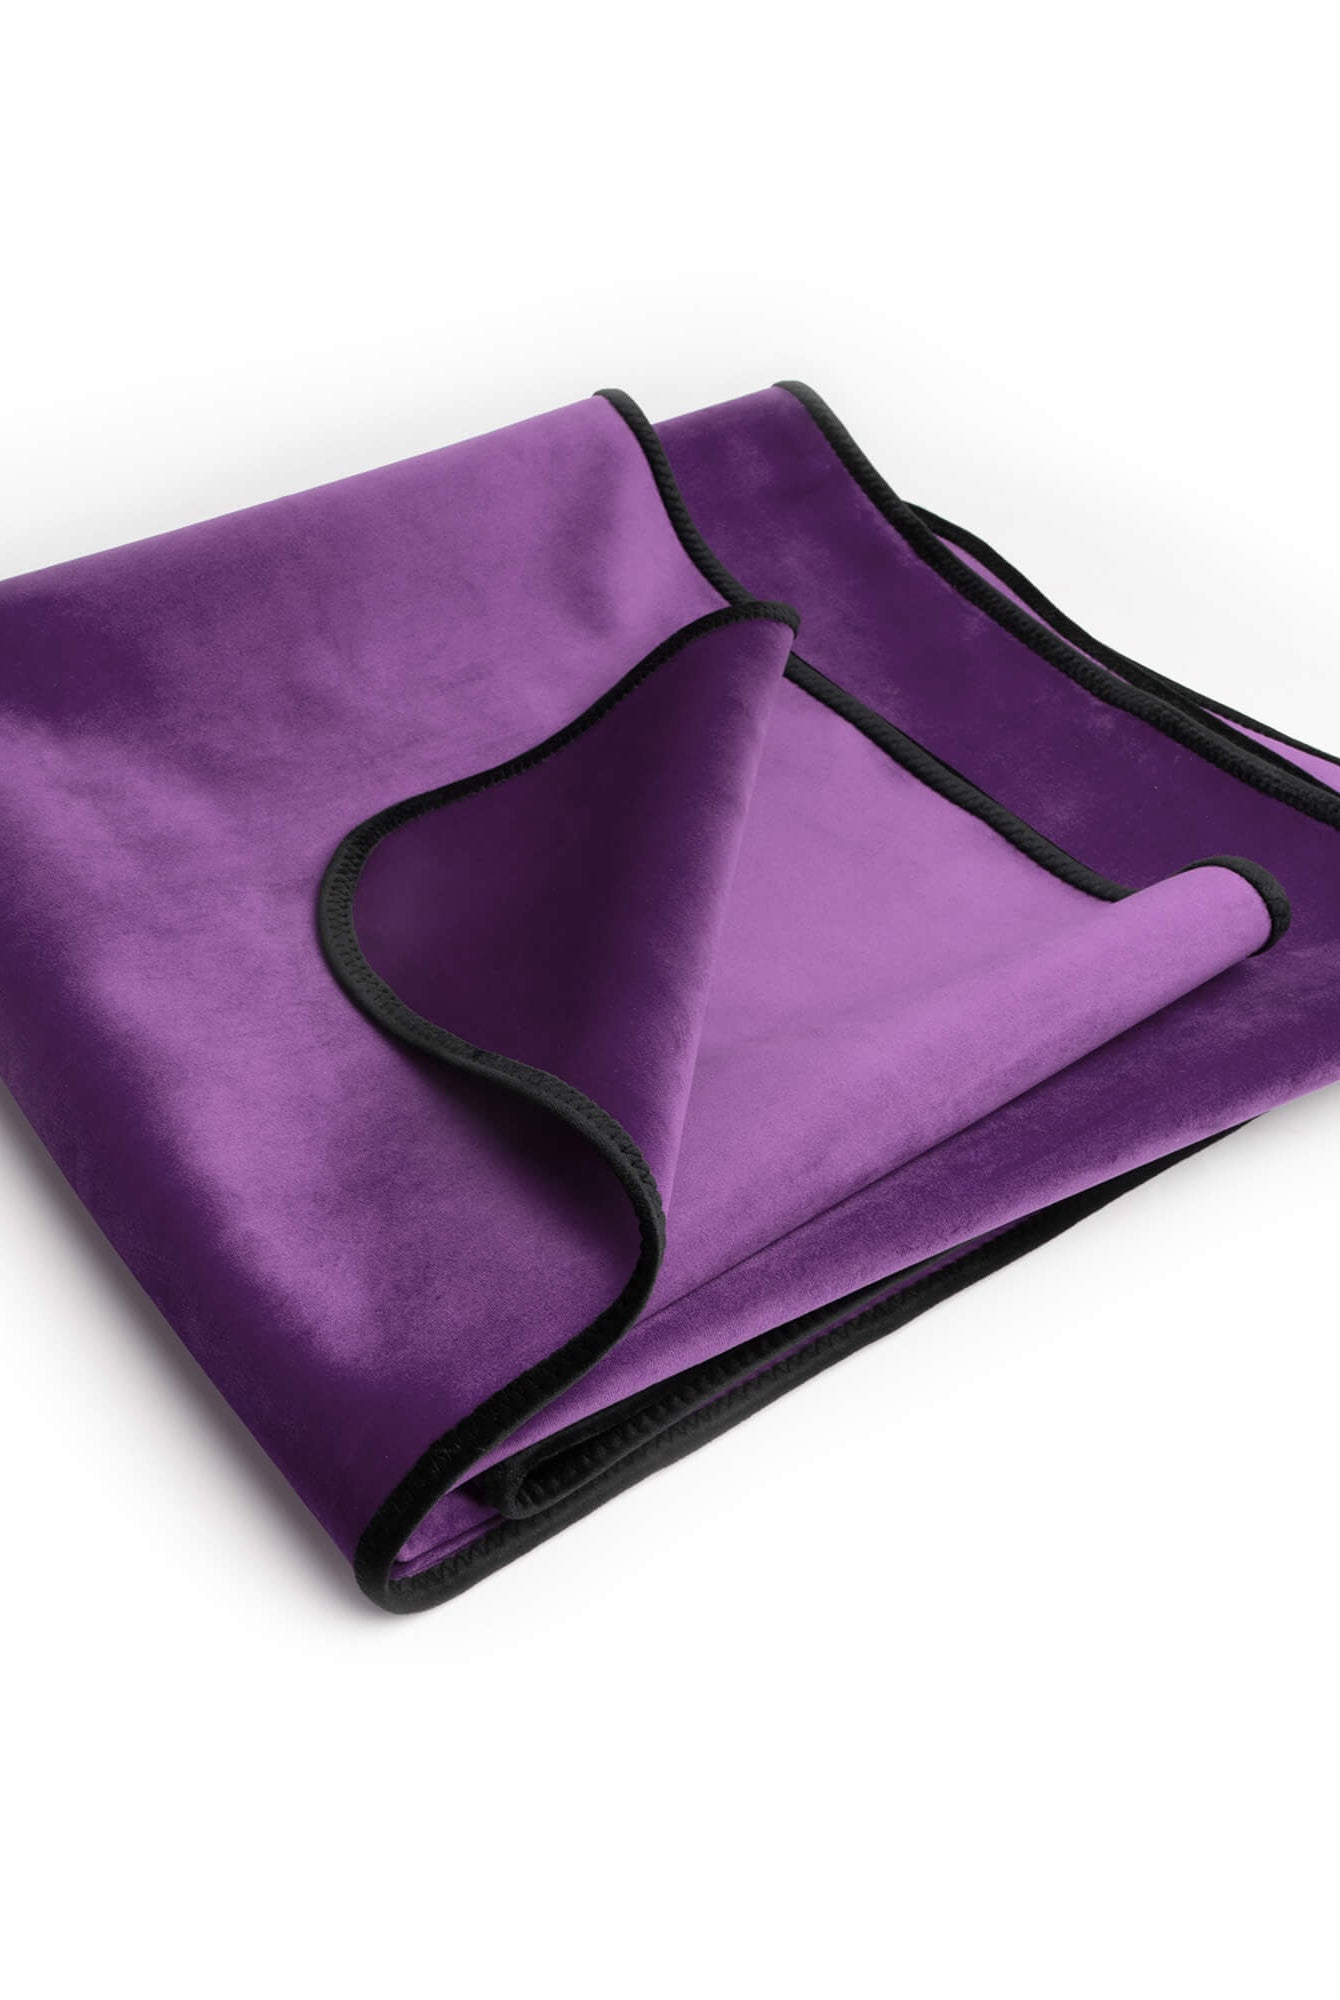 Fascinator Lush Throw  Purple Microvelvet - King Size - ACME Pleasure